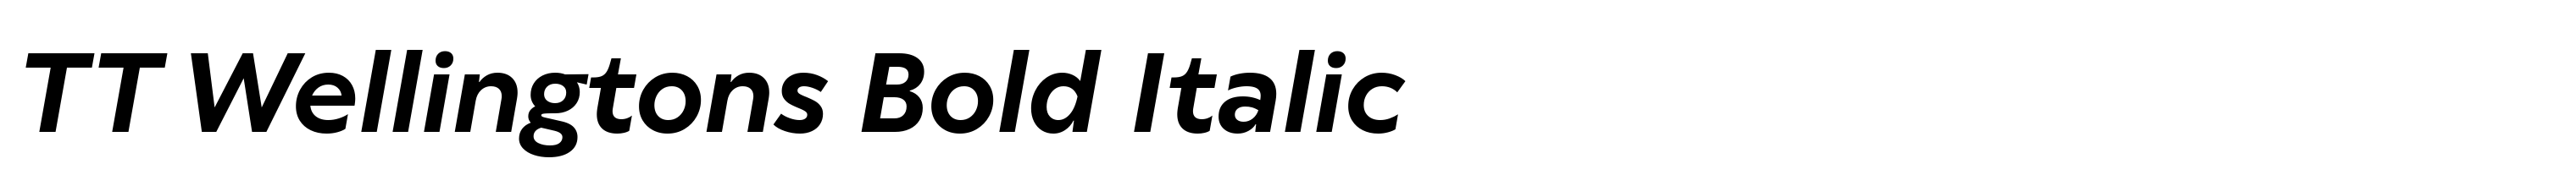 TT Wellingtons Bold Italic